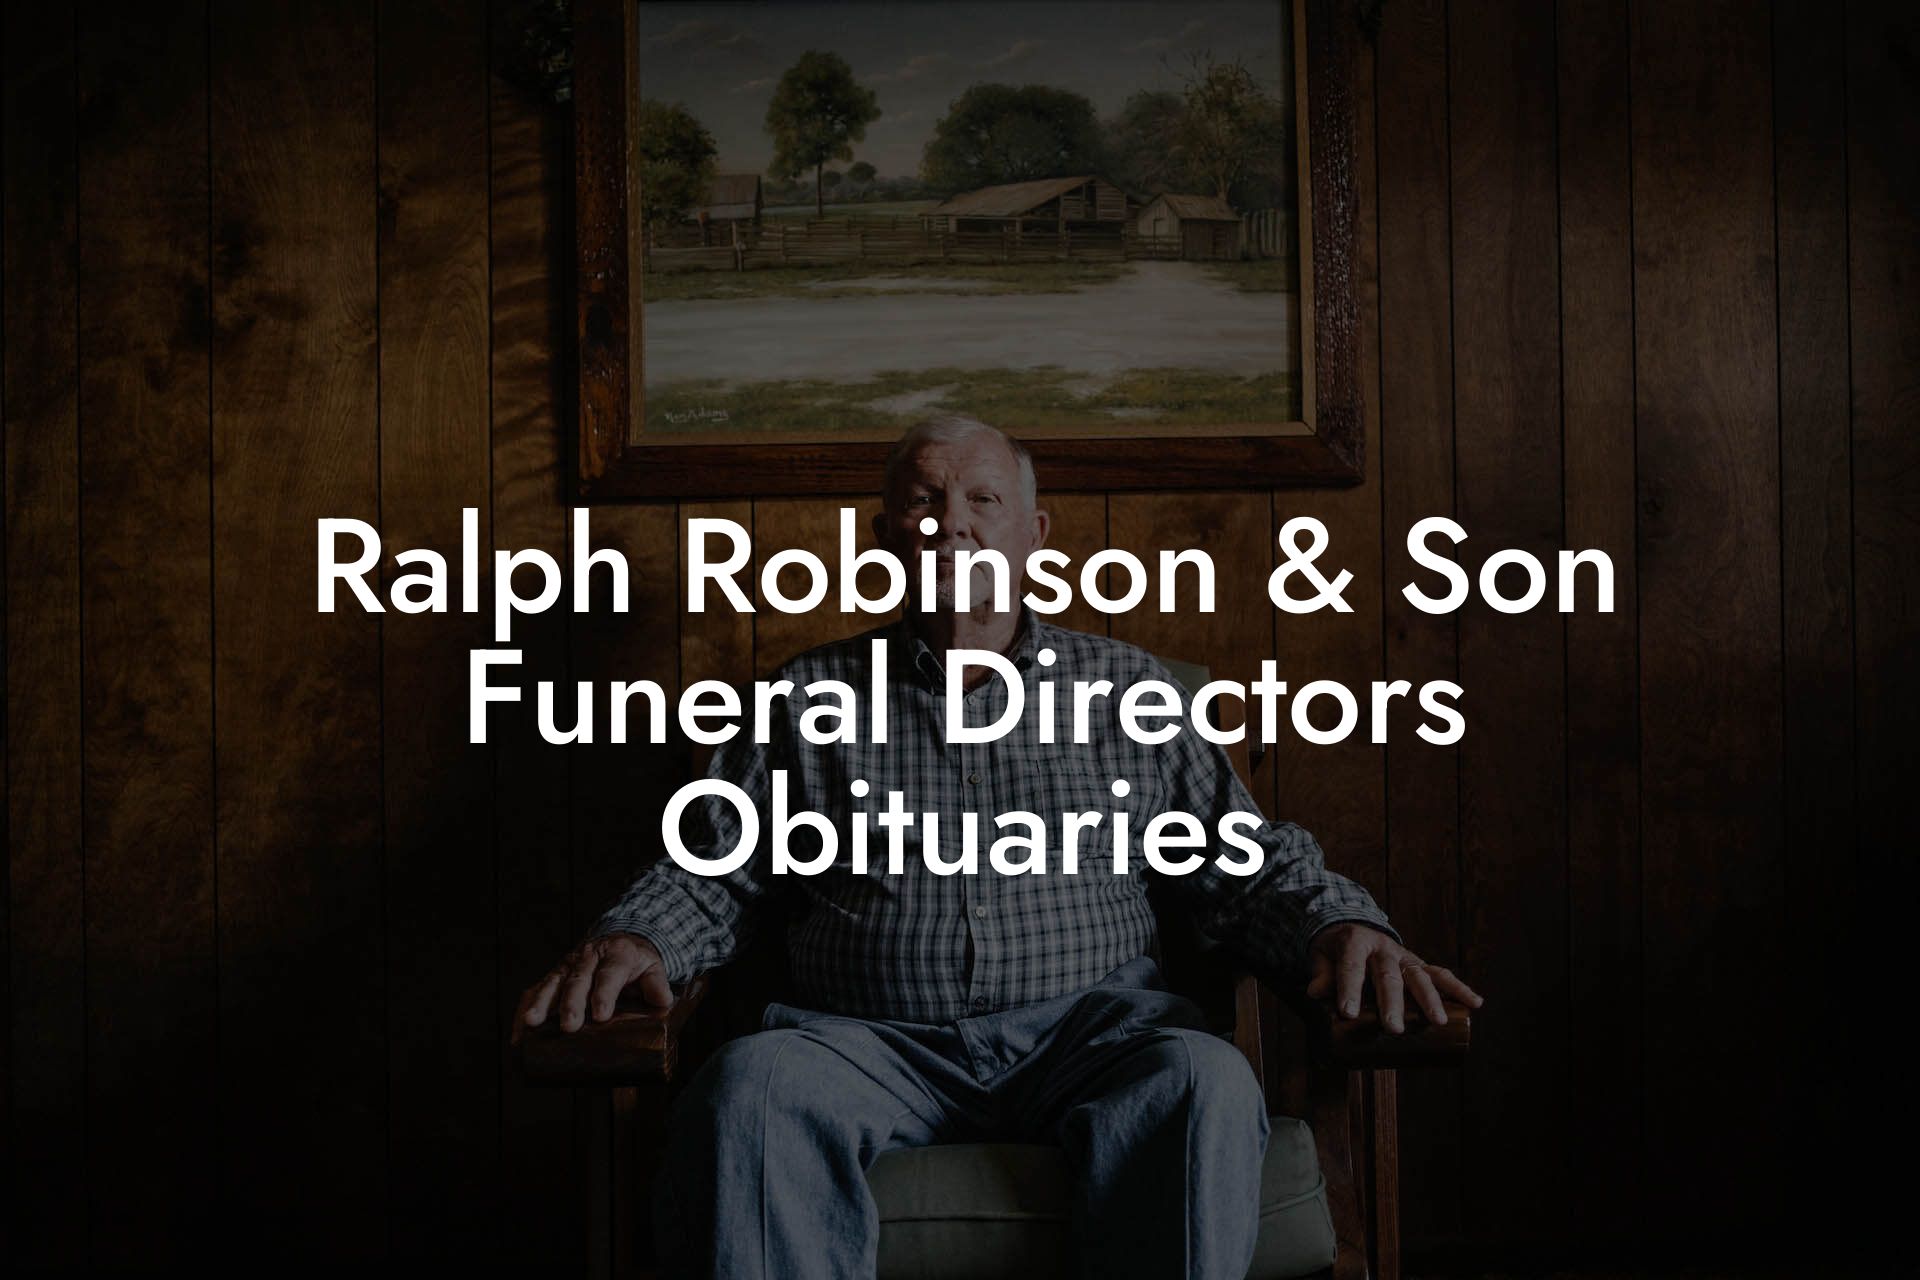 Ralph Robinson & Son Funeral Directors Obituaries